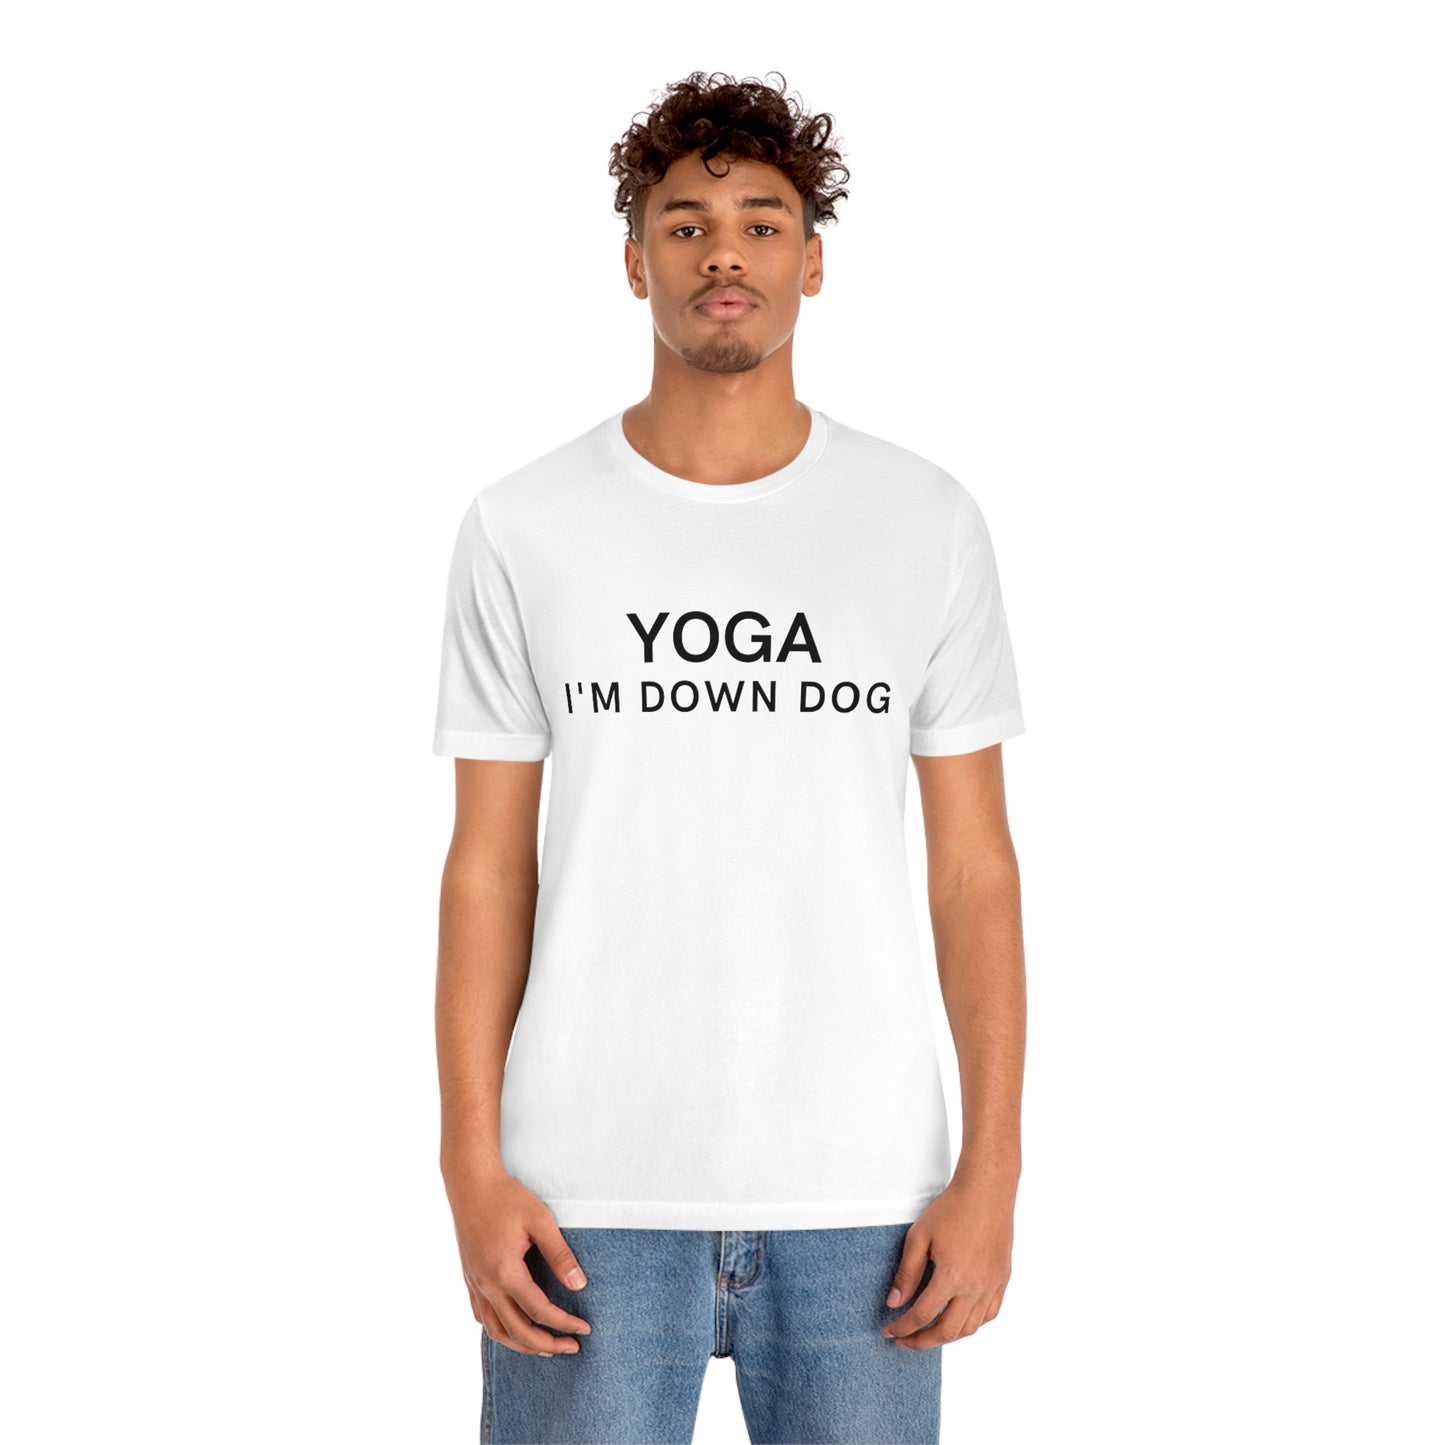 Yoga I'm Down Dog T-Shirt | EDGY T-Shirt Company | Funny Unisex Jersey Short Sleeve Tee